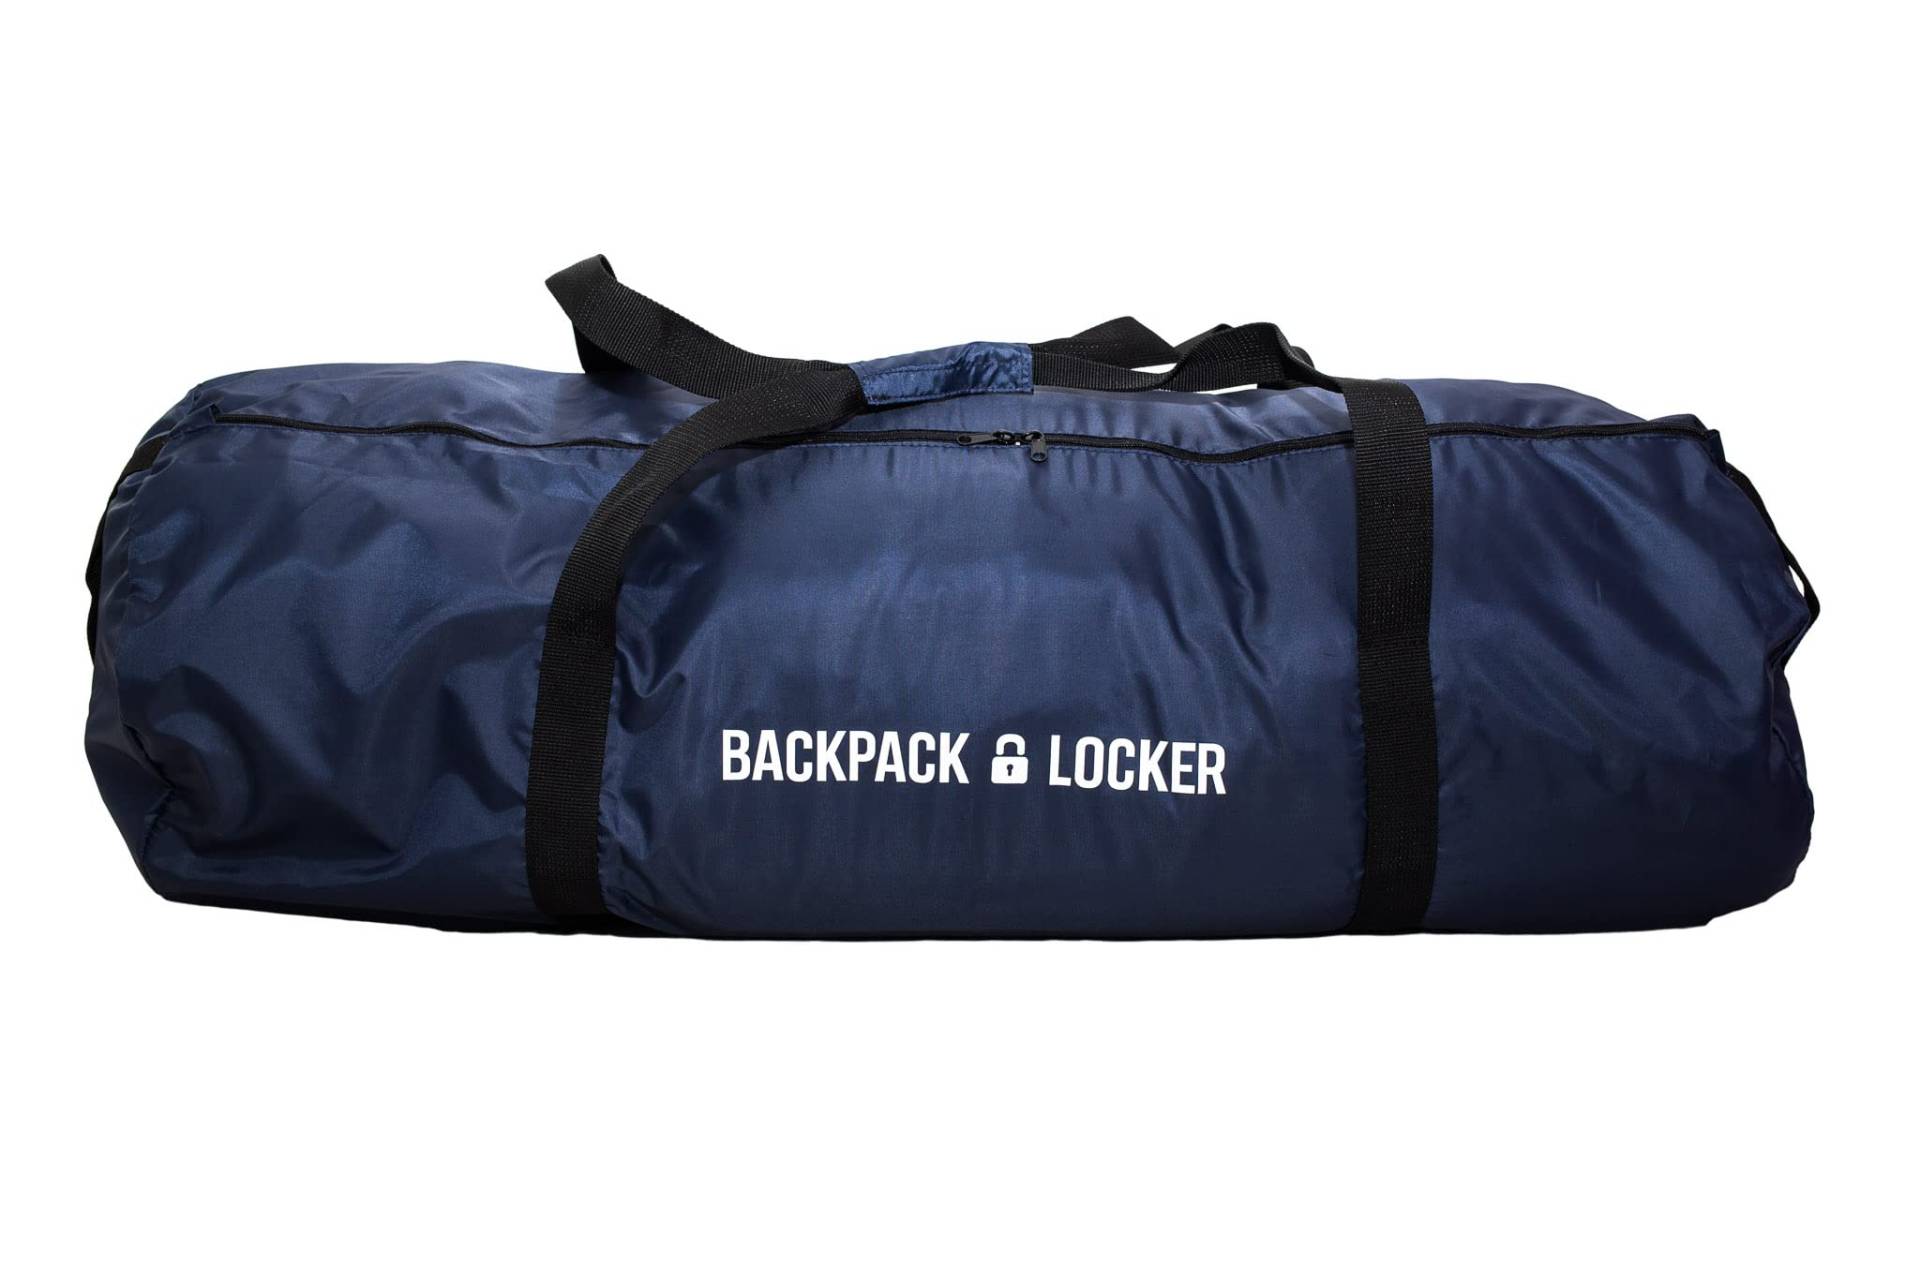 Backpack Locker - Dachbox Tasche - Große Schultertasche (65-180 Liter) (Blau, 65 Liter) von Backpack Locker